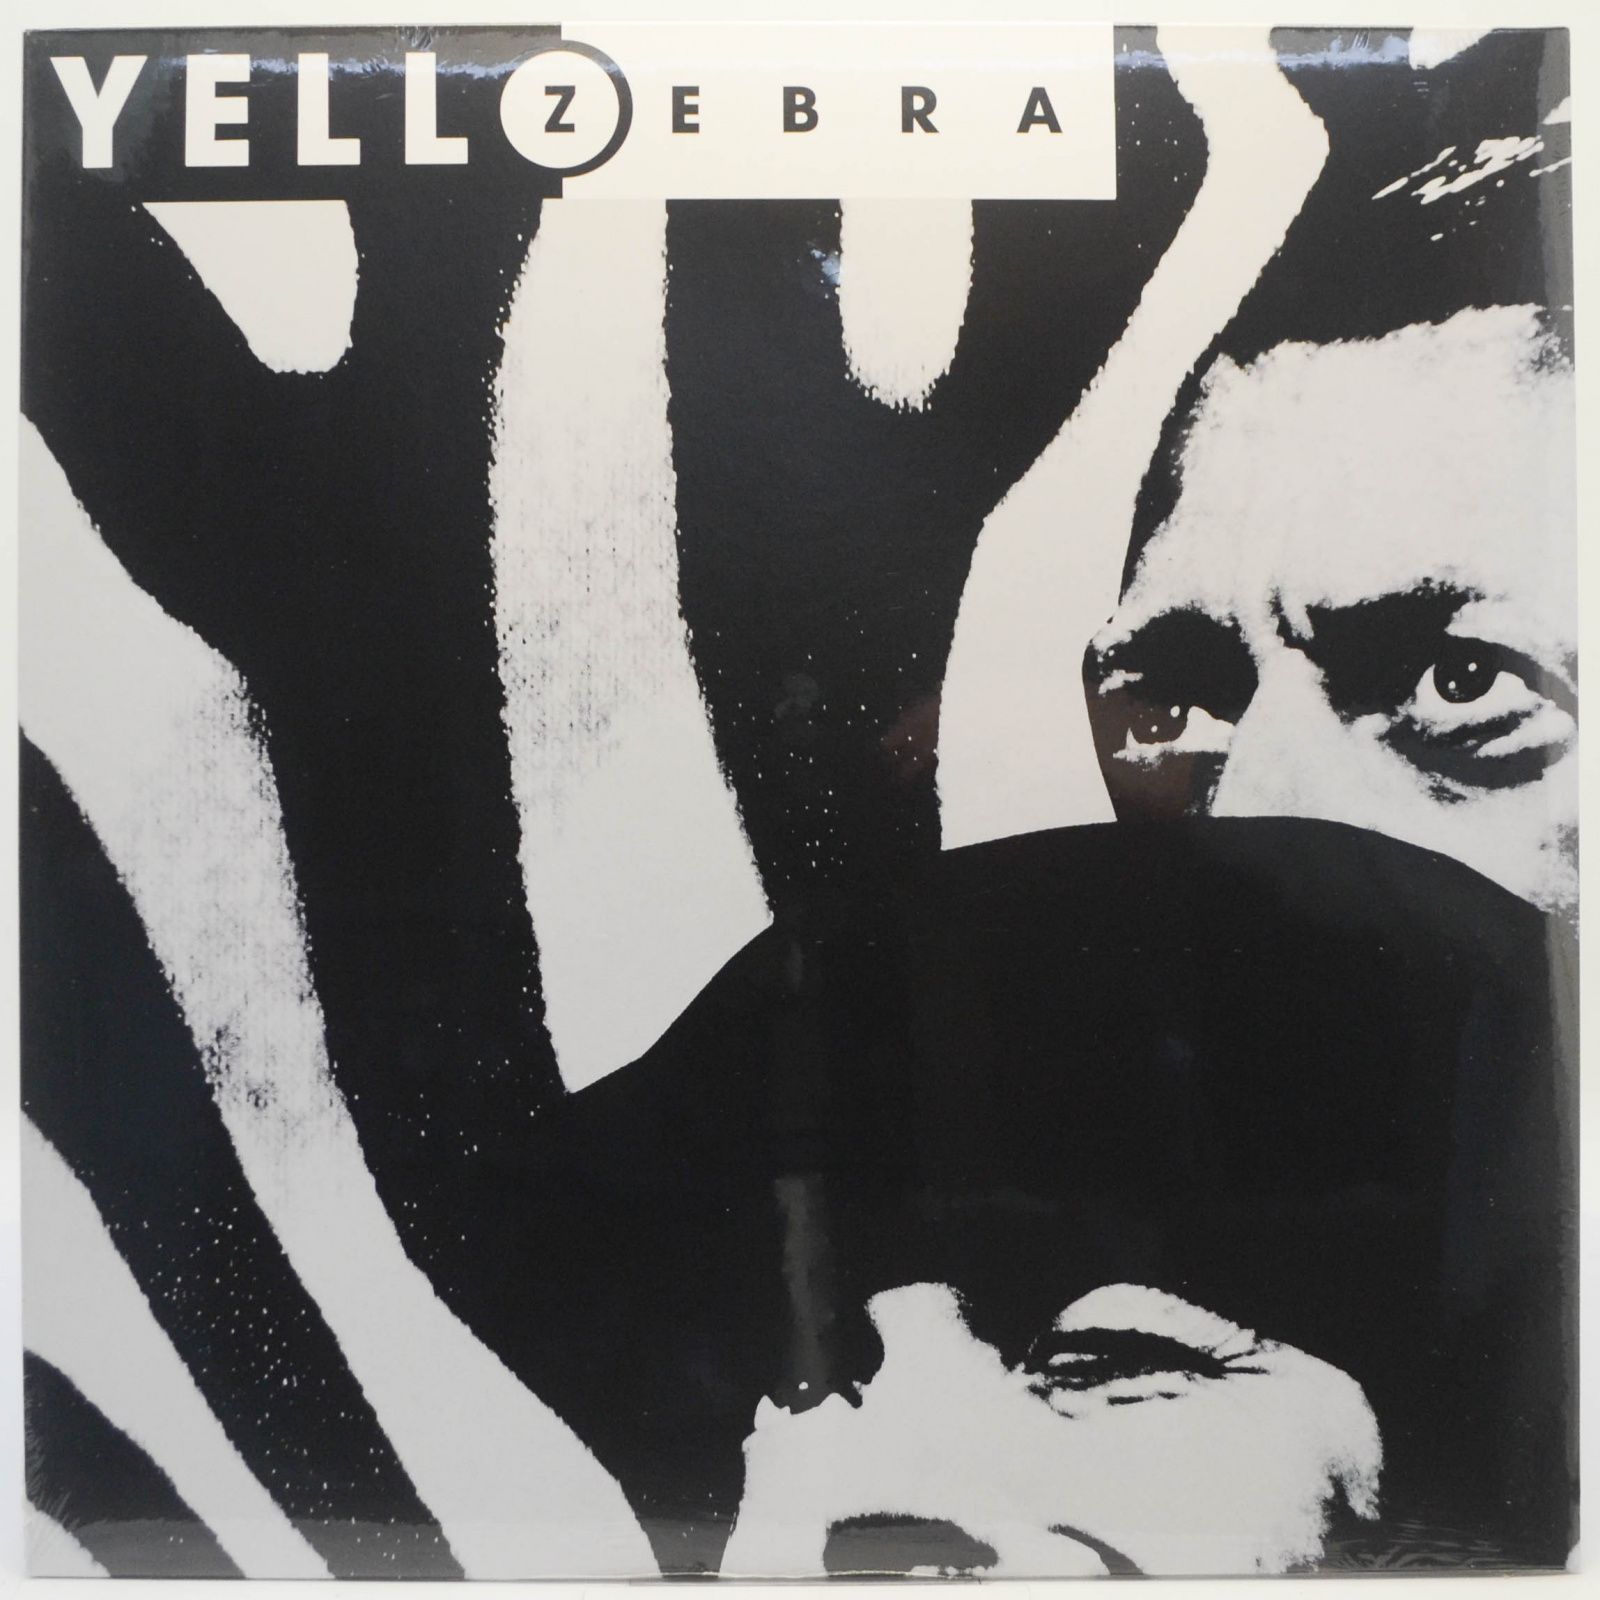 Yello — Zebra, 1994